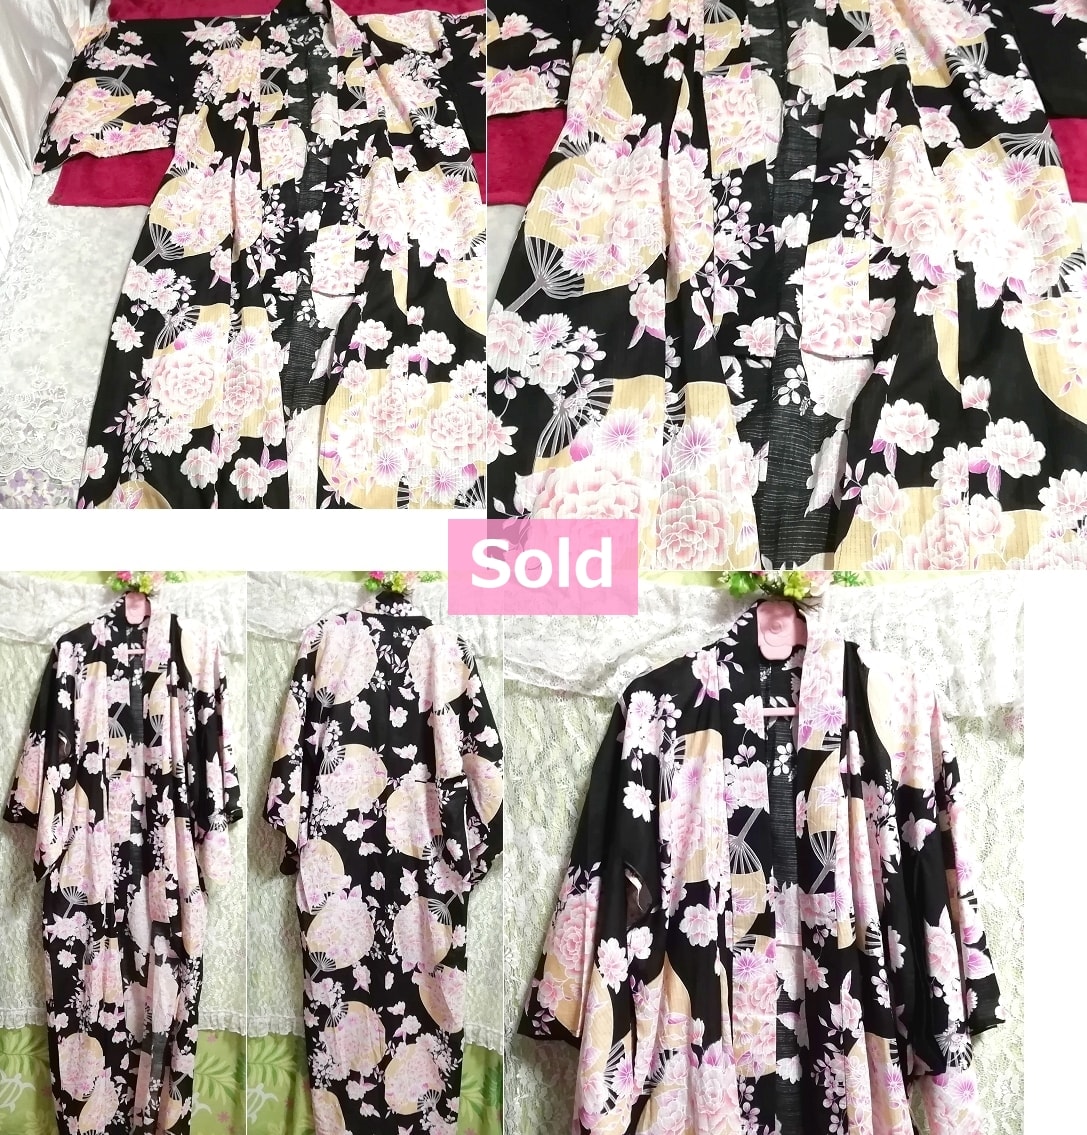 कुरोदा फैन चेरी ब्लॉसम पैटर्न युकाटा जापानी कपड़े किमोनो होरी ब्लैक सकुरा पुष्प पैटर्न युकाता जापानी कपड़े किमोनो